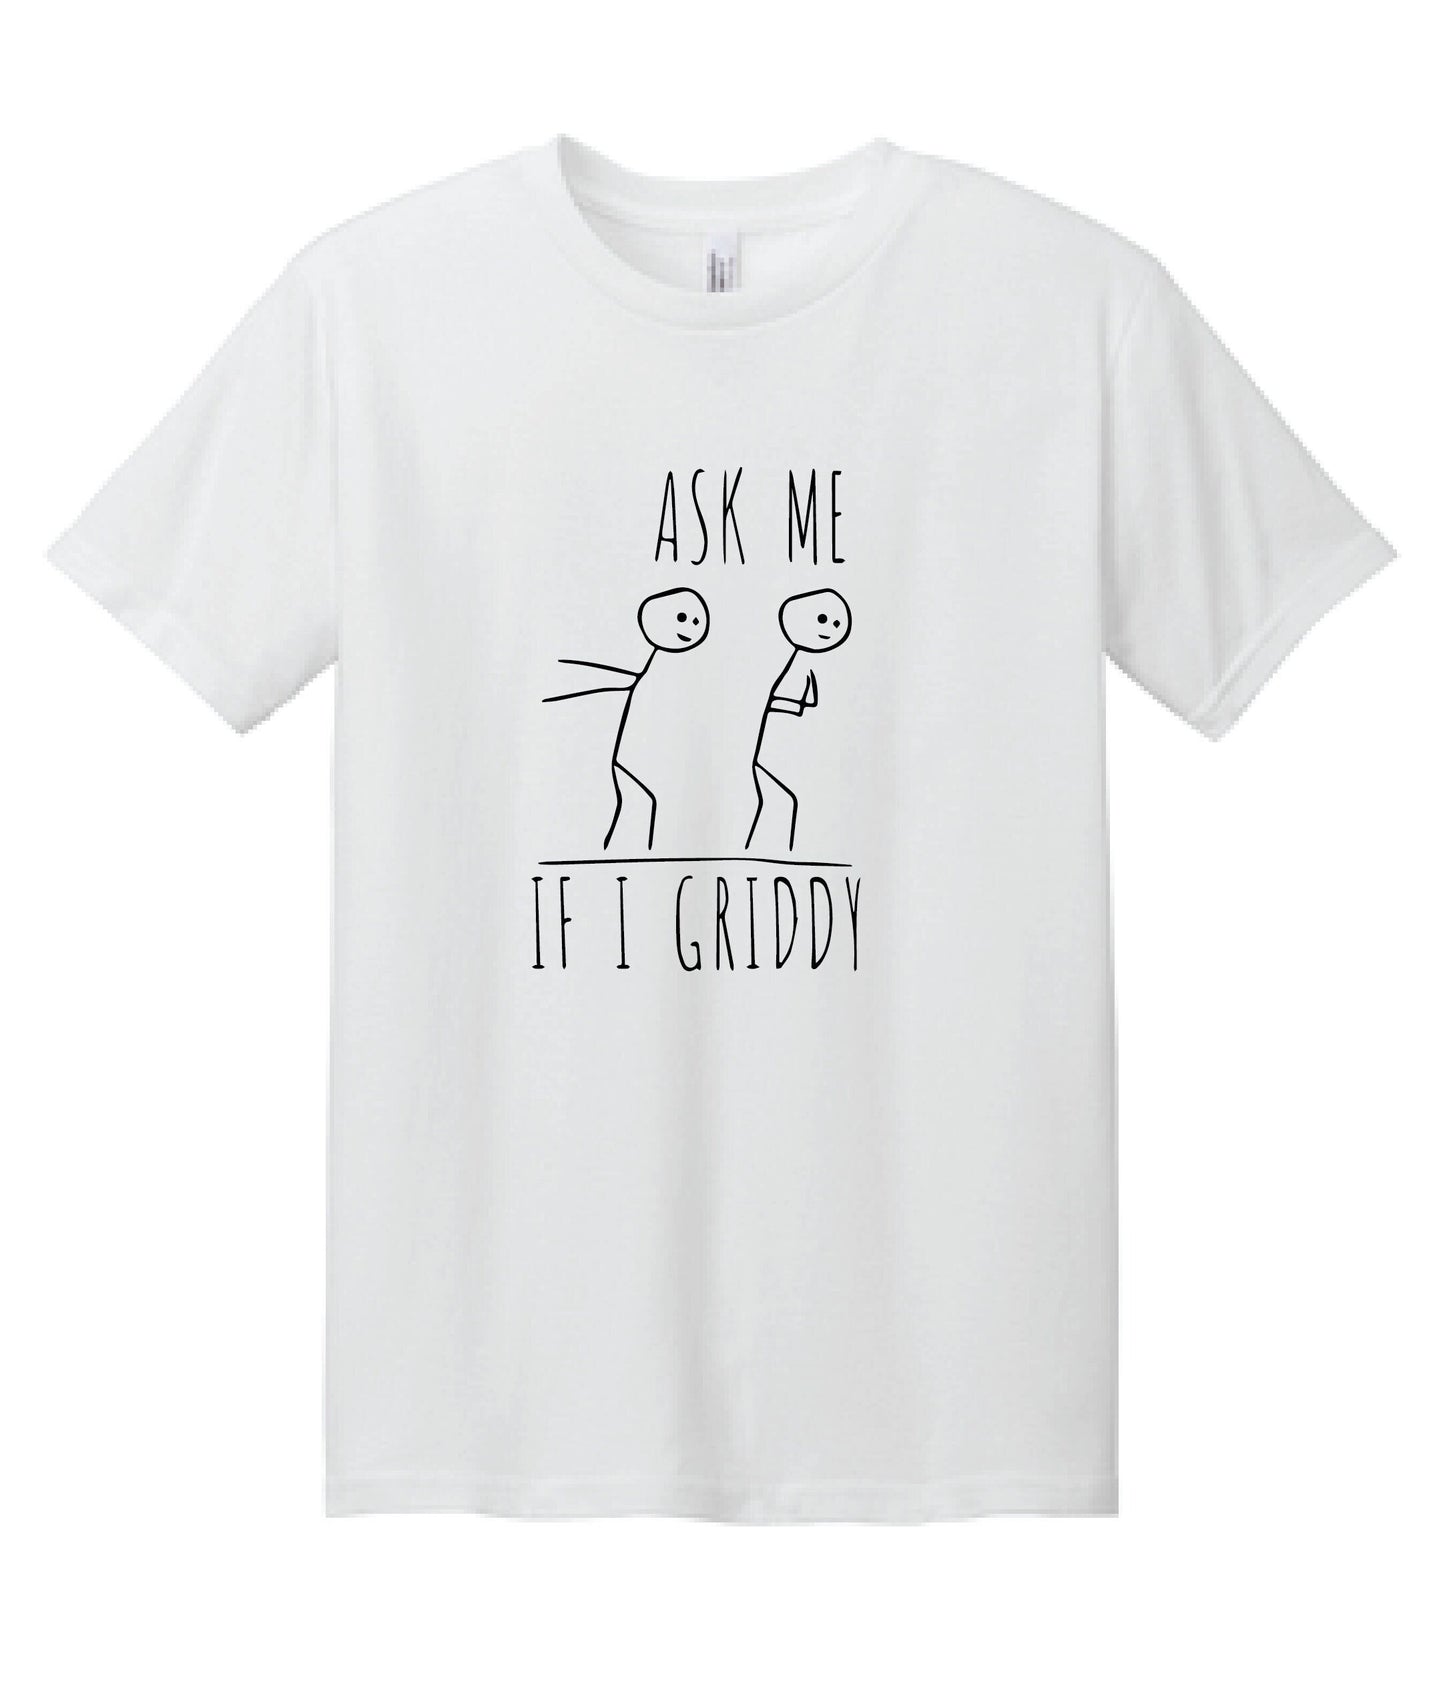 Ask Me If I Griddy T-shirt - Griddy T-shirt - Fun T-shirt - Cool Tee